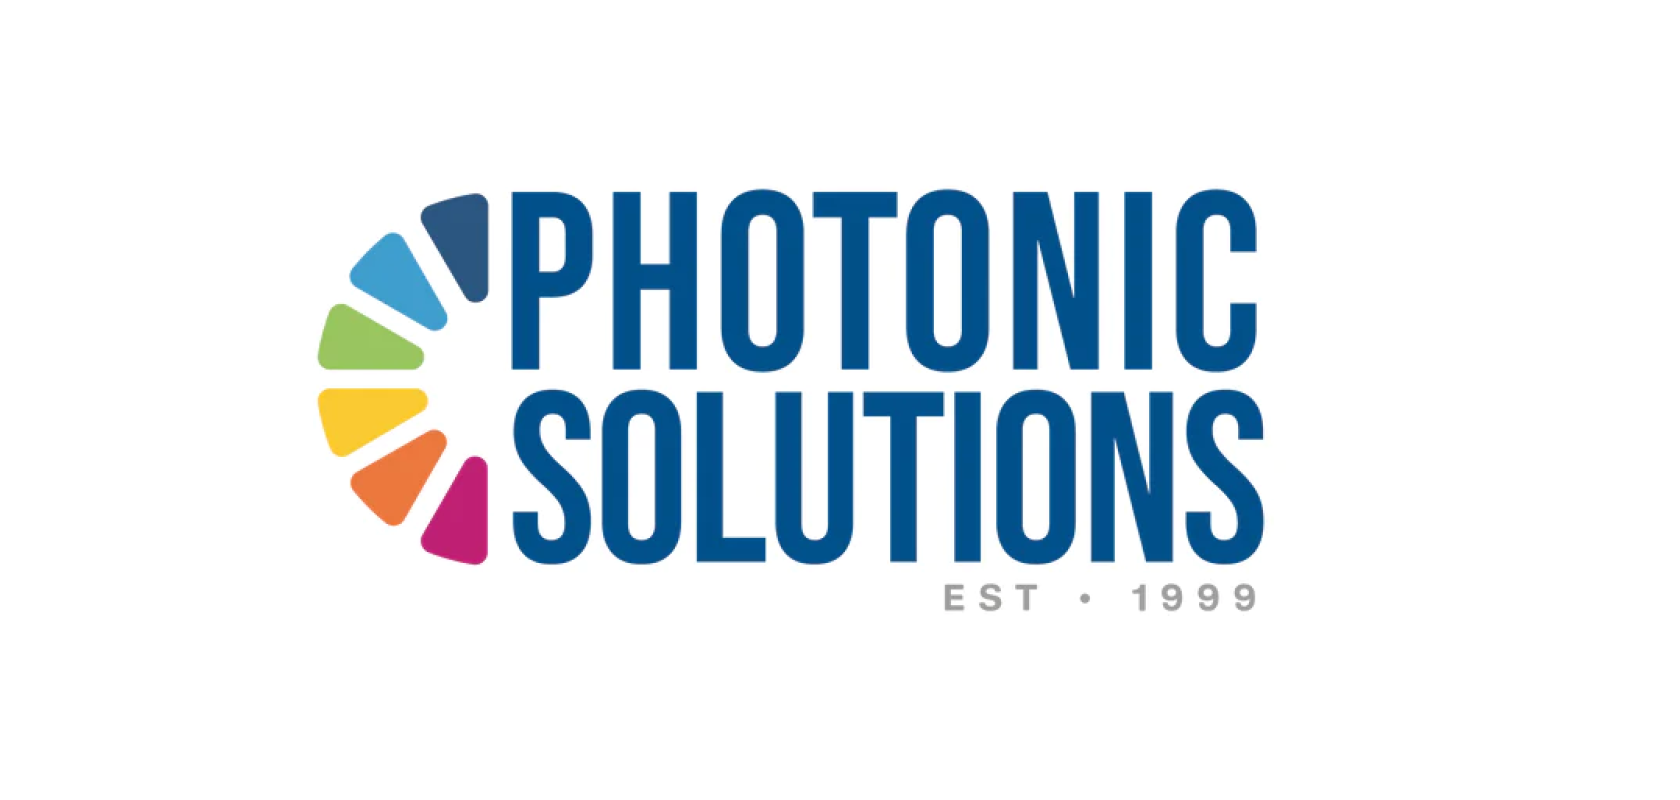 Photonic Solutions Logo